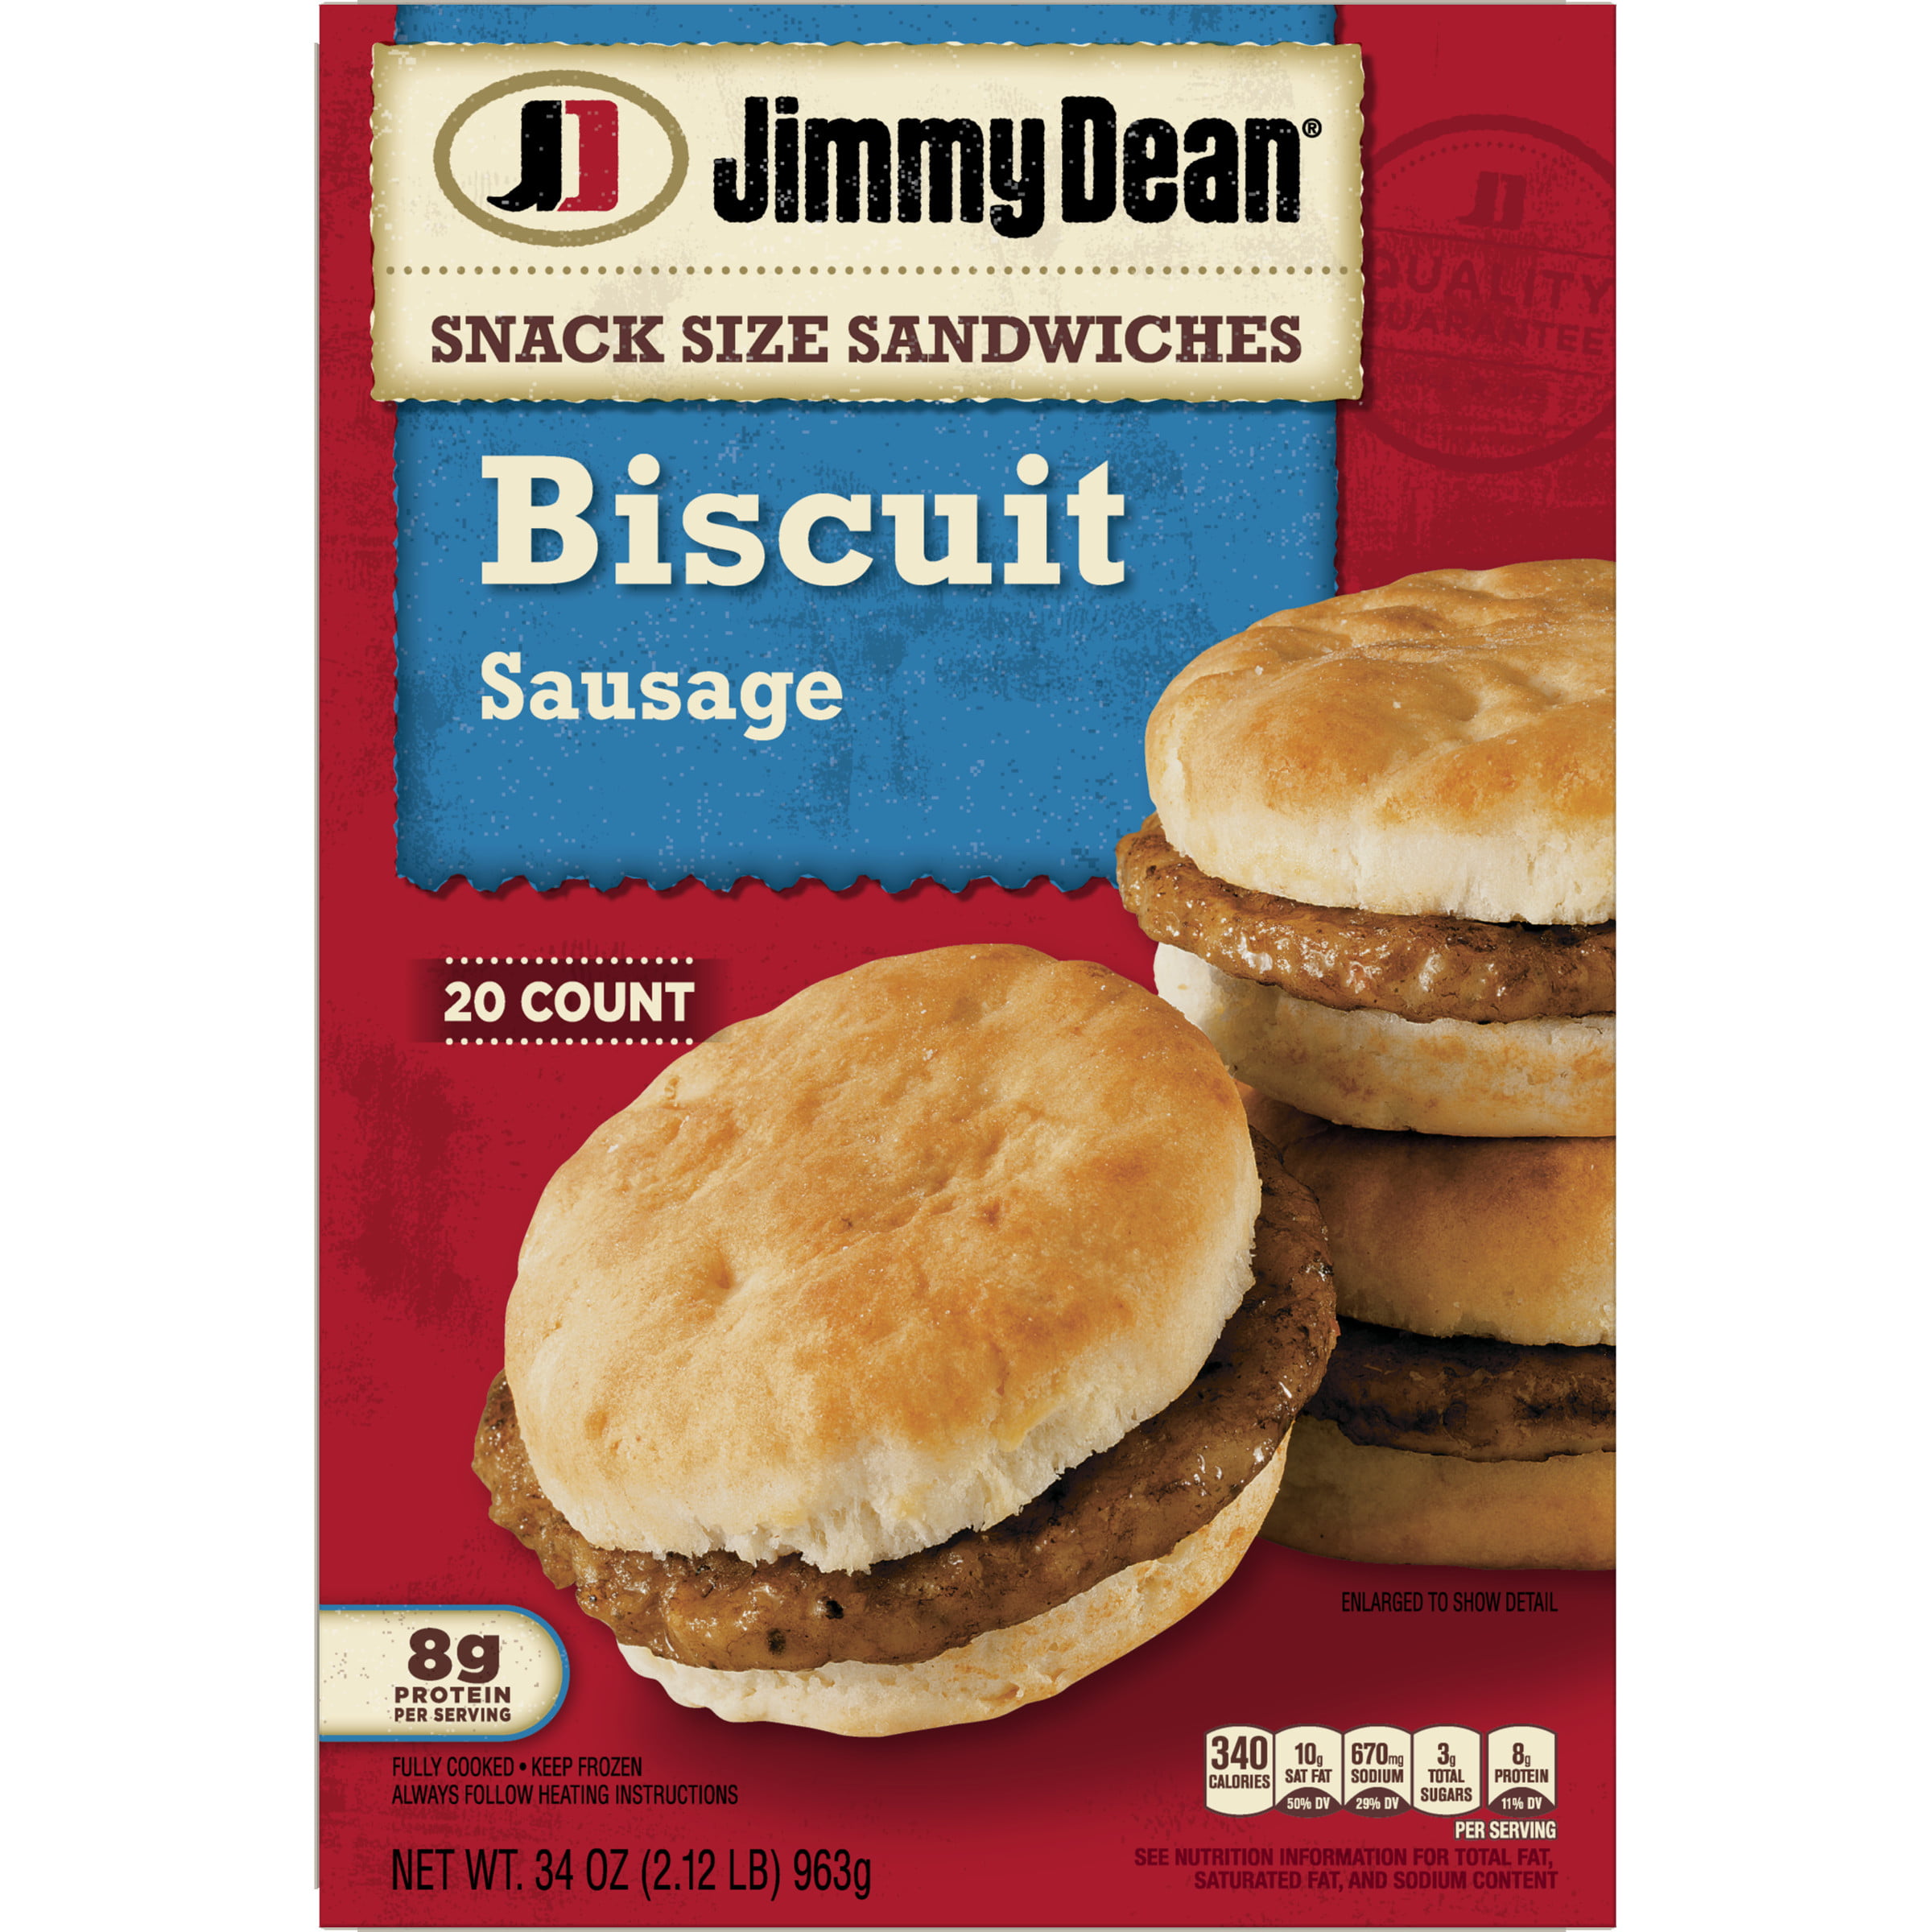 jimmy dean sausage biscuit nutrition